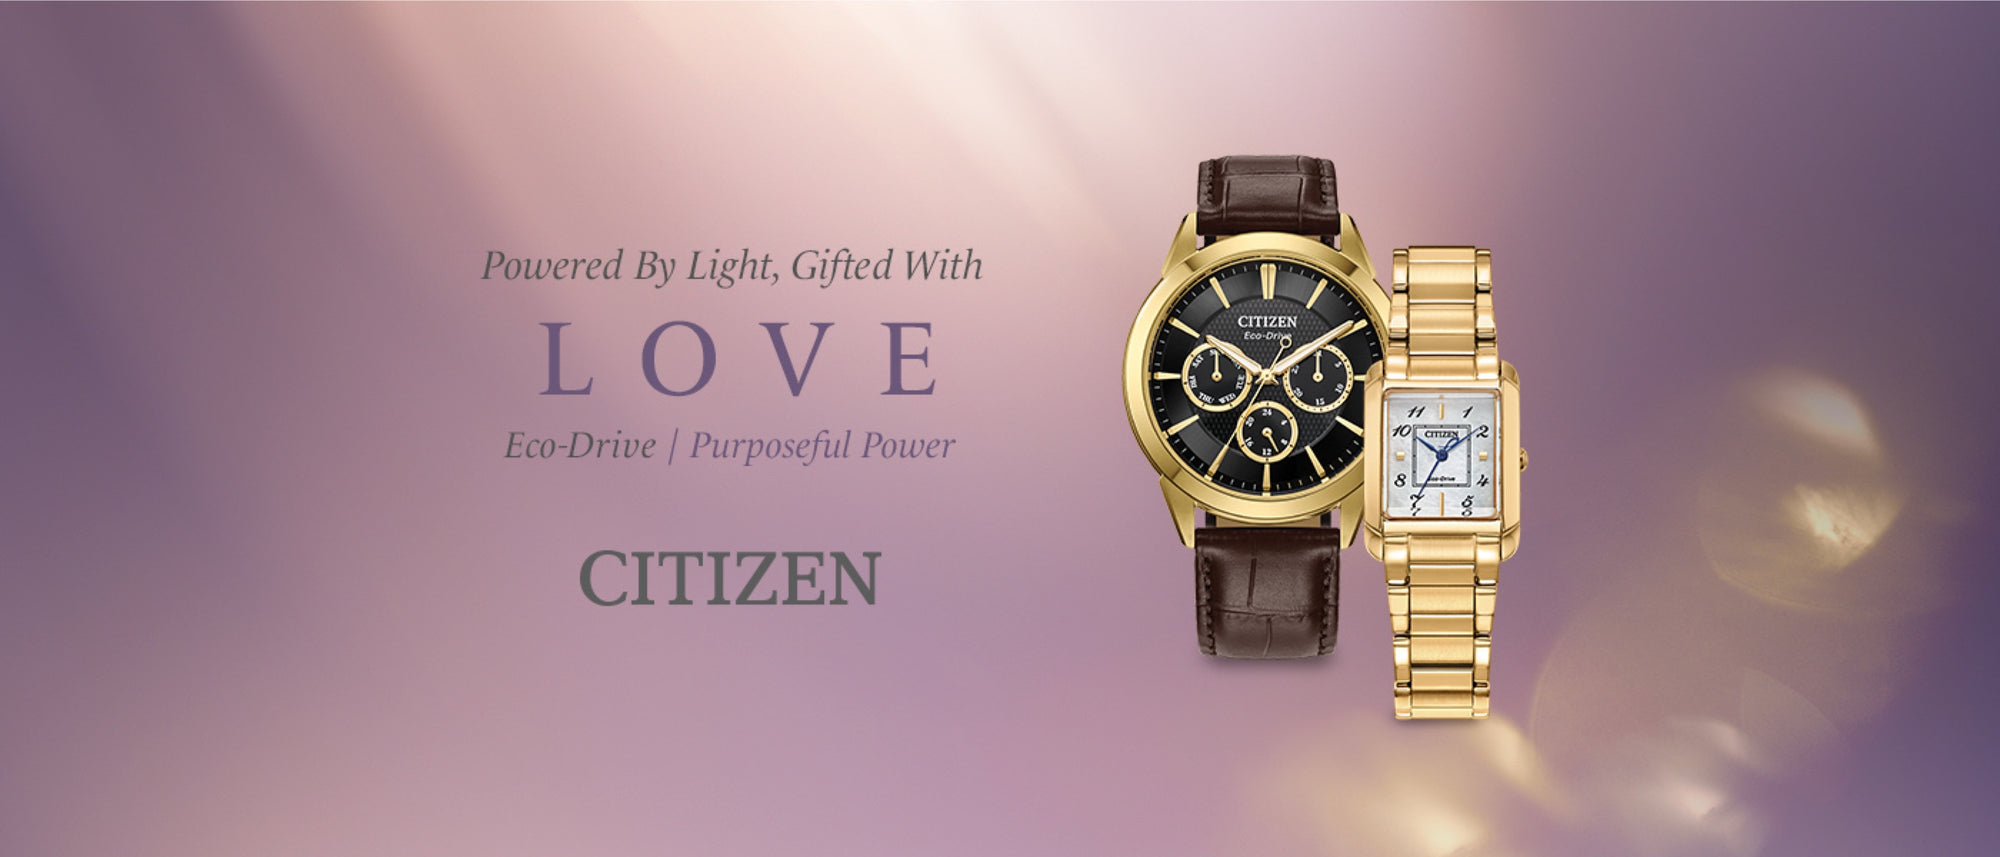 Citizen Promaster Diver Automatic Men's Watch NY0154-51L